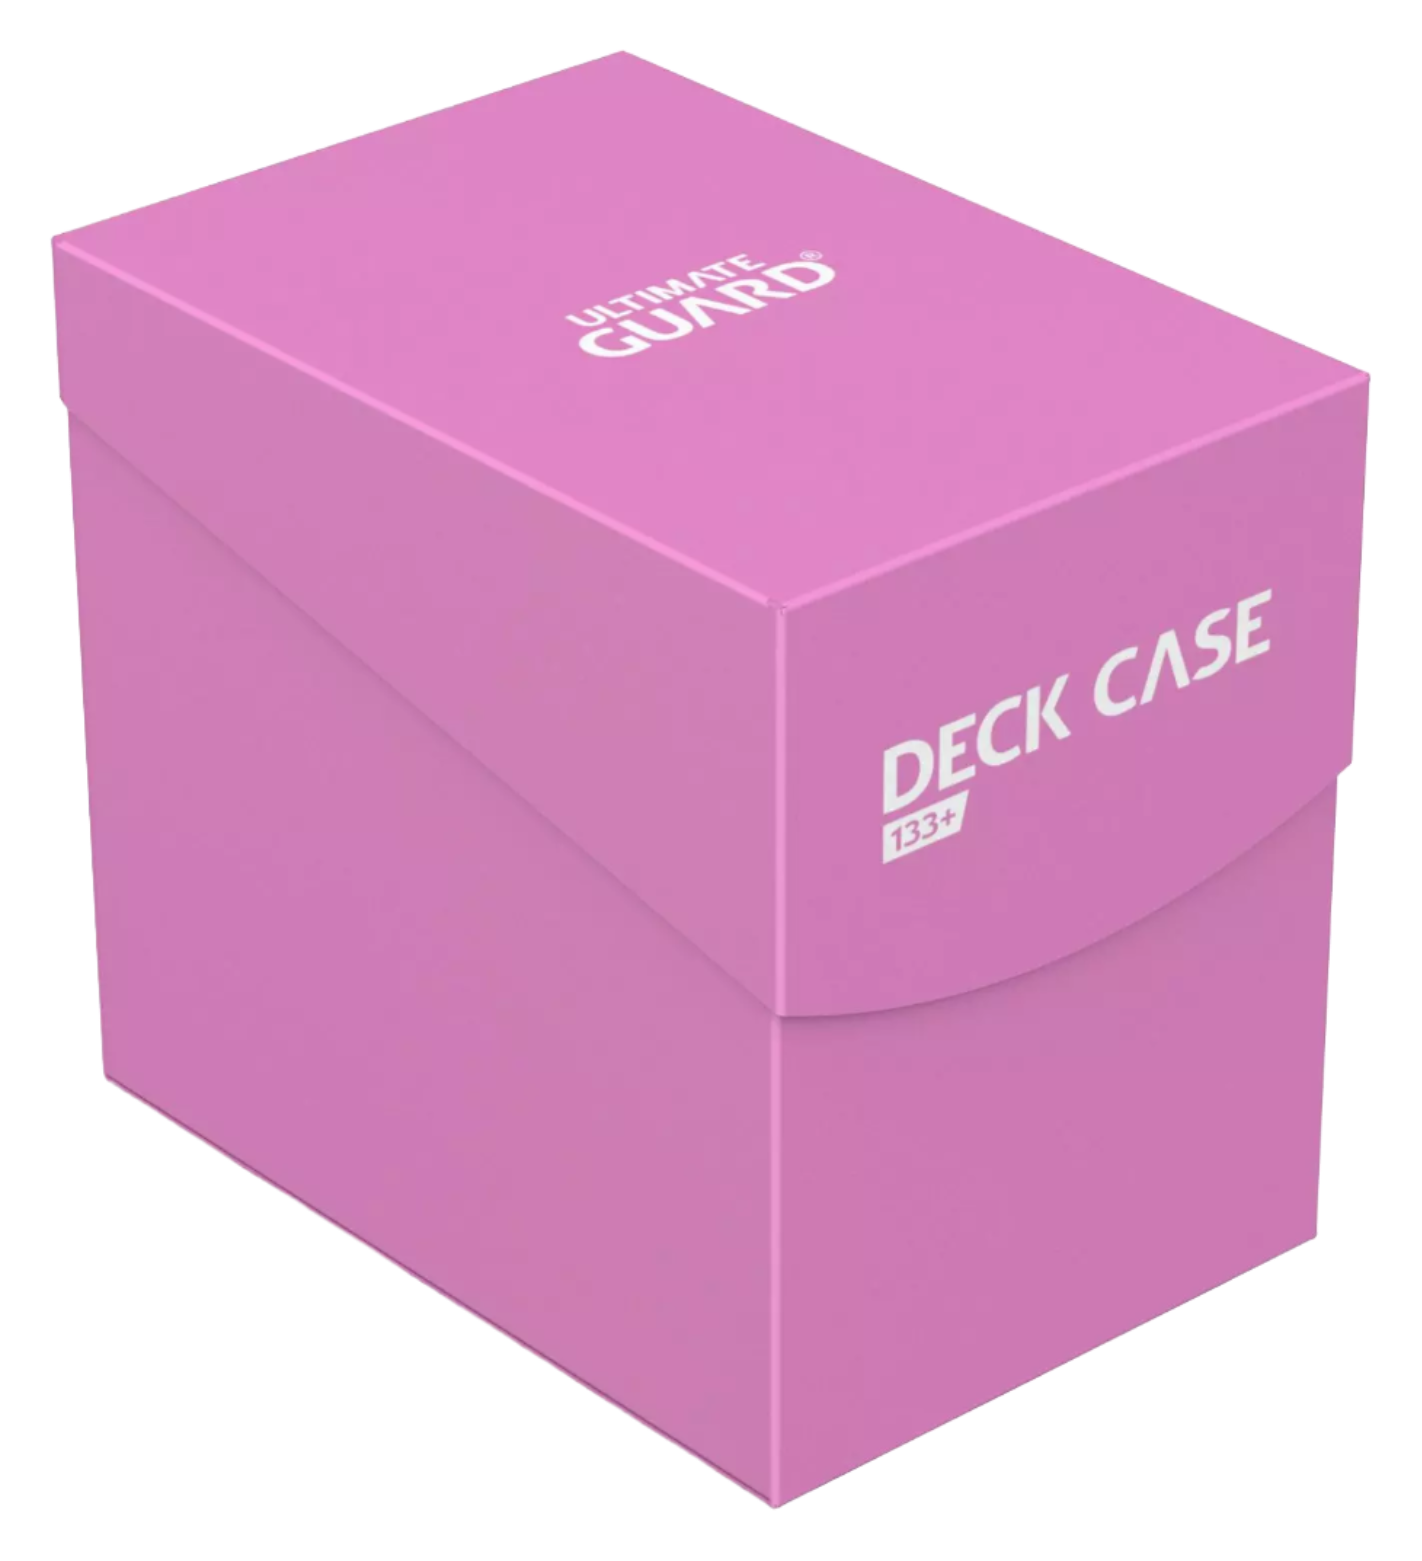 Ultimate Guard - 133+ Deck Case - Pink